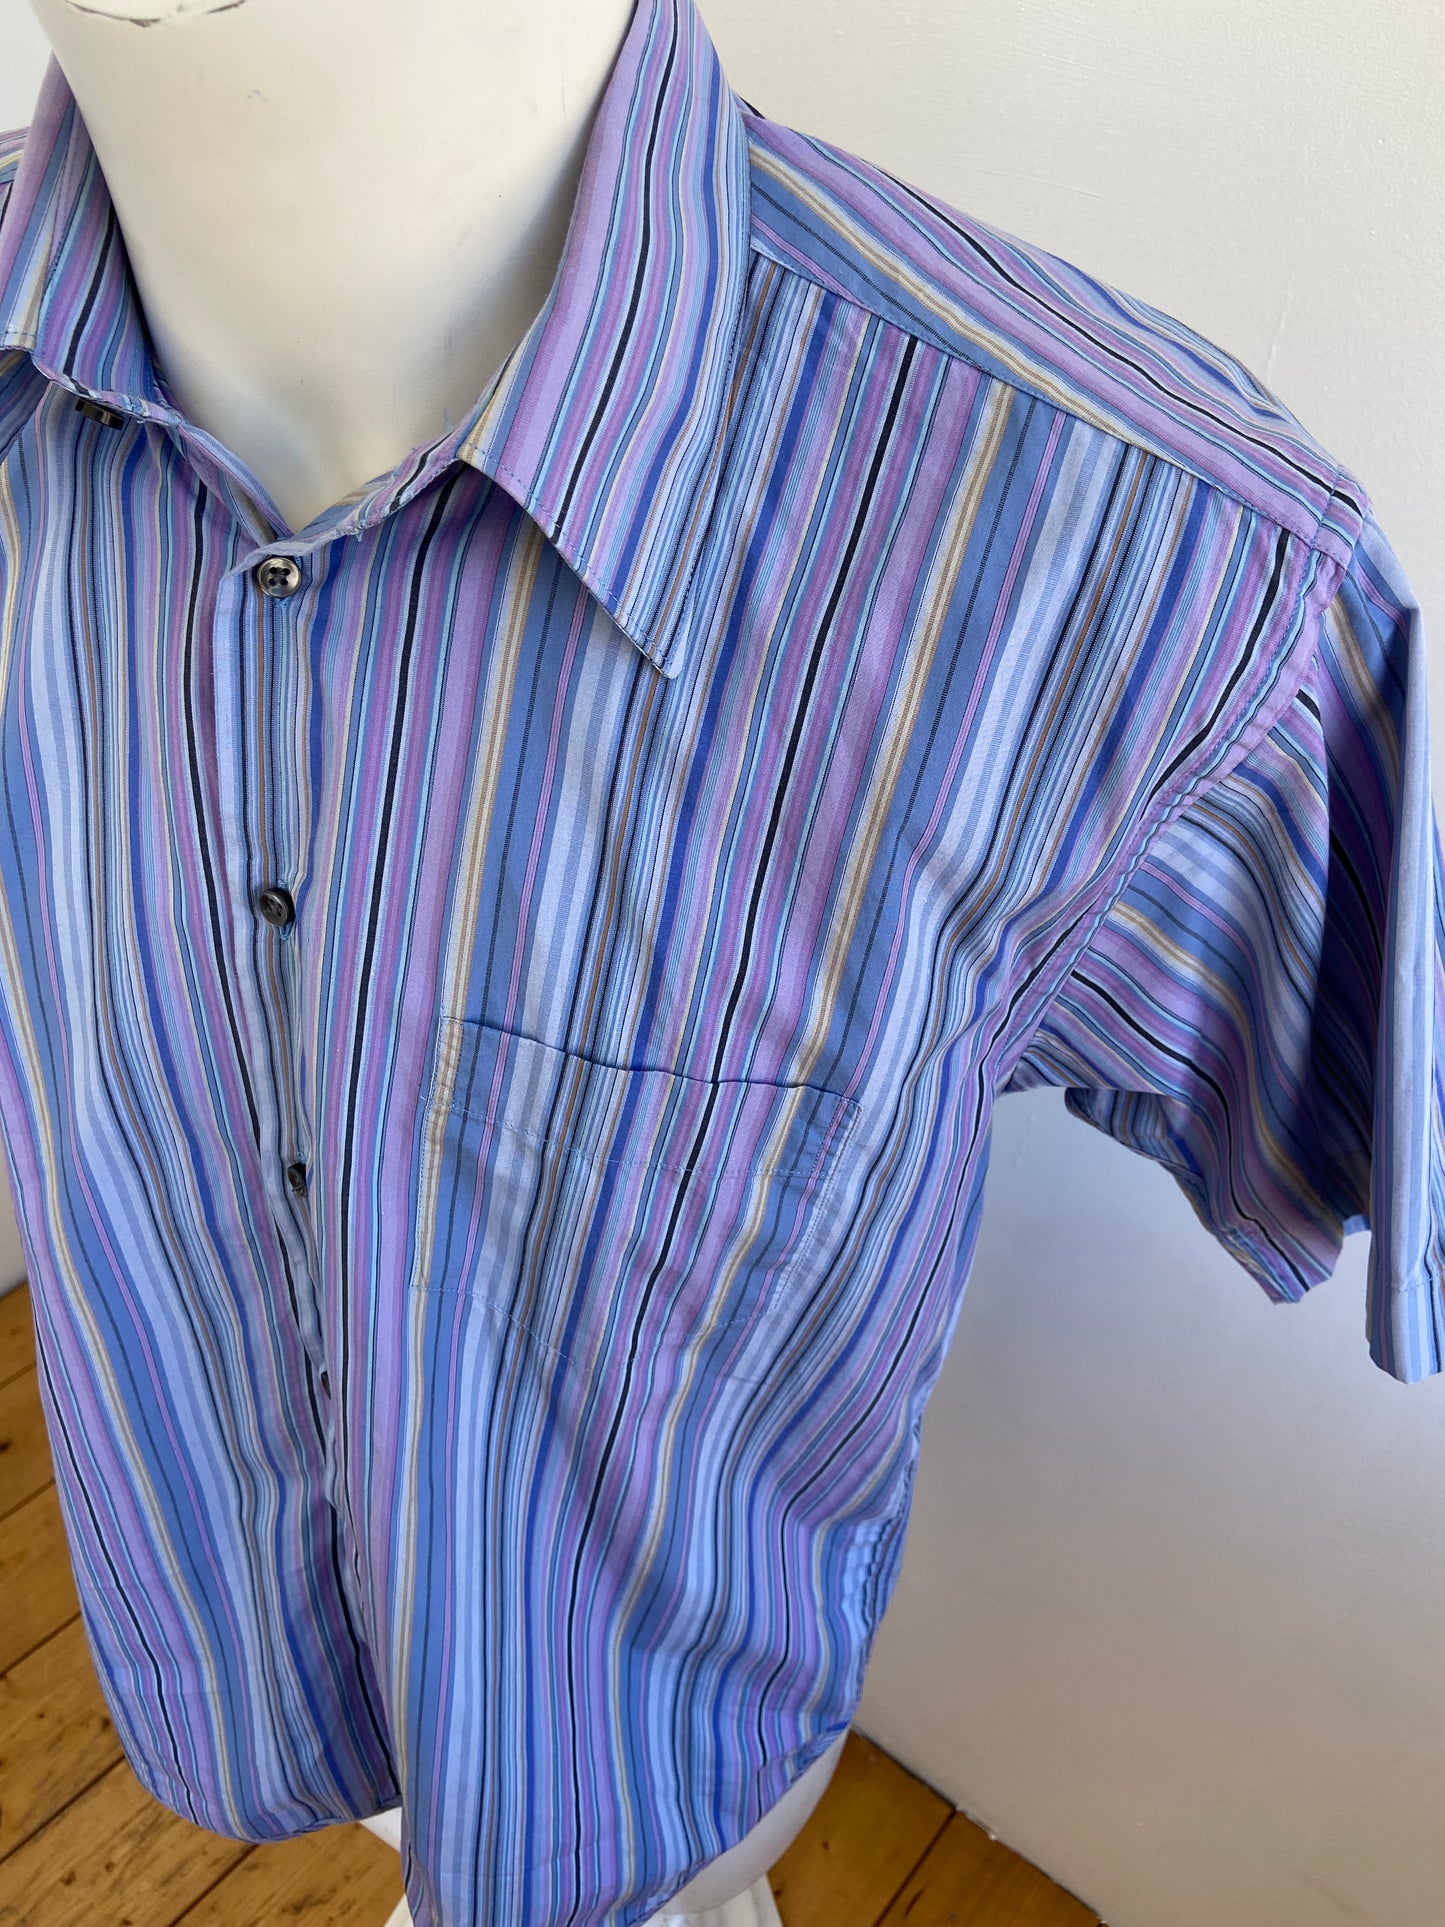 Lilac stripes shirt